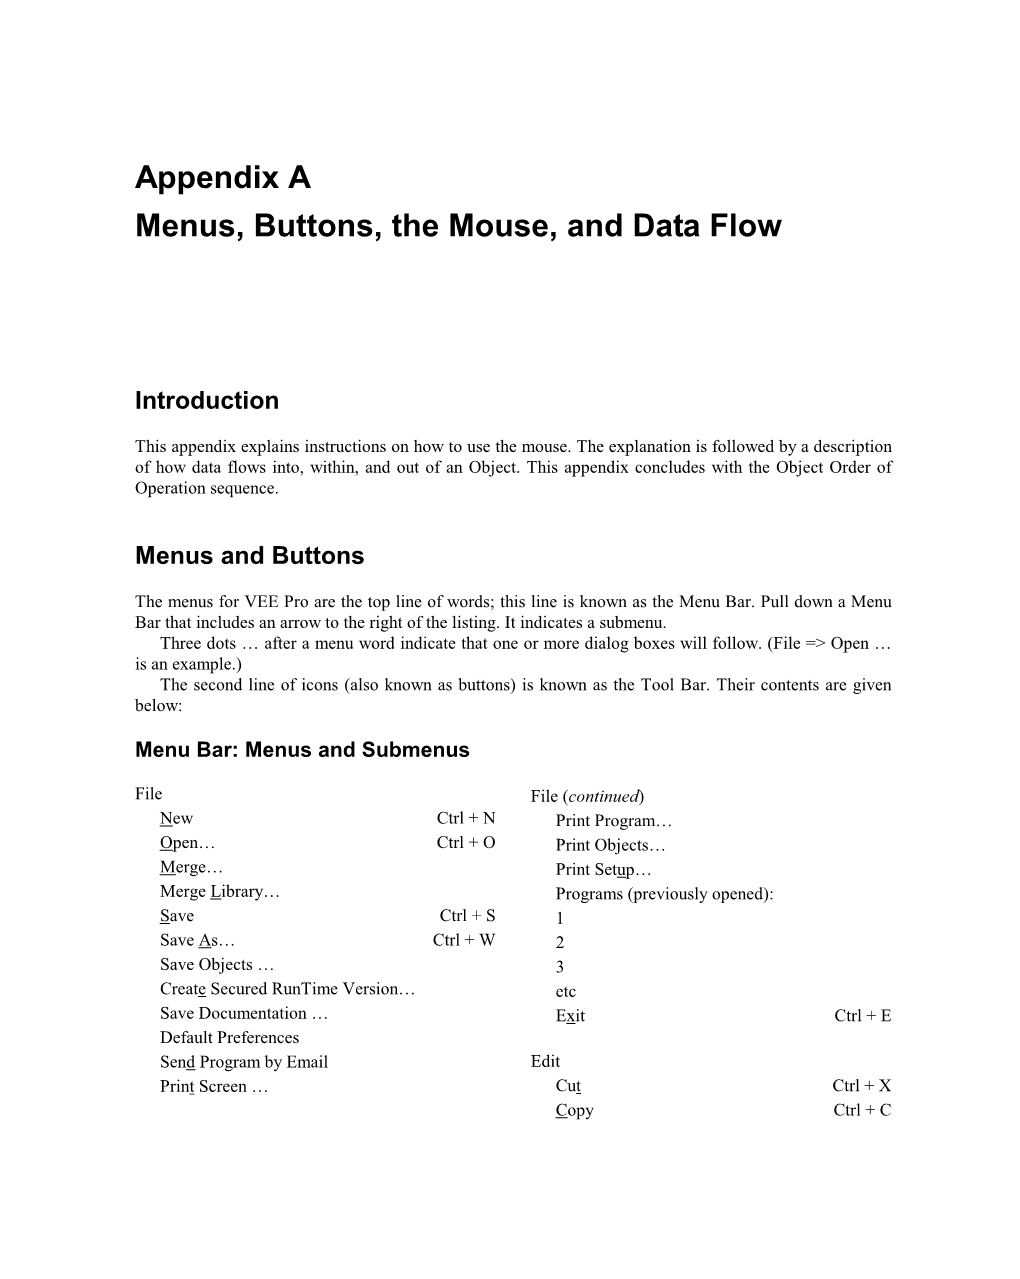 Appendix a Menus, Buttons, the Mouse, and Data Flow